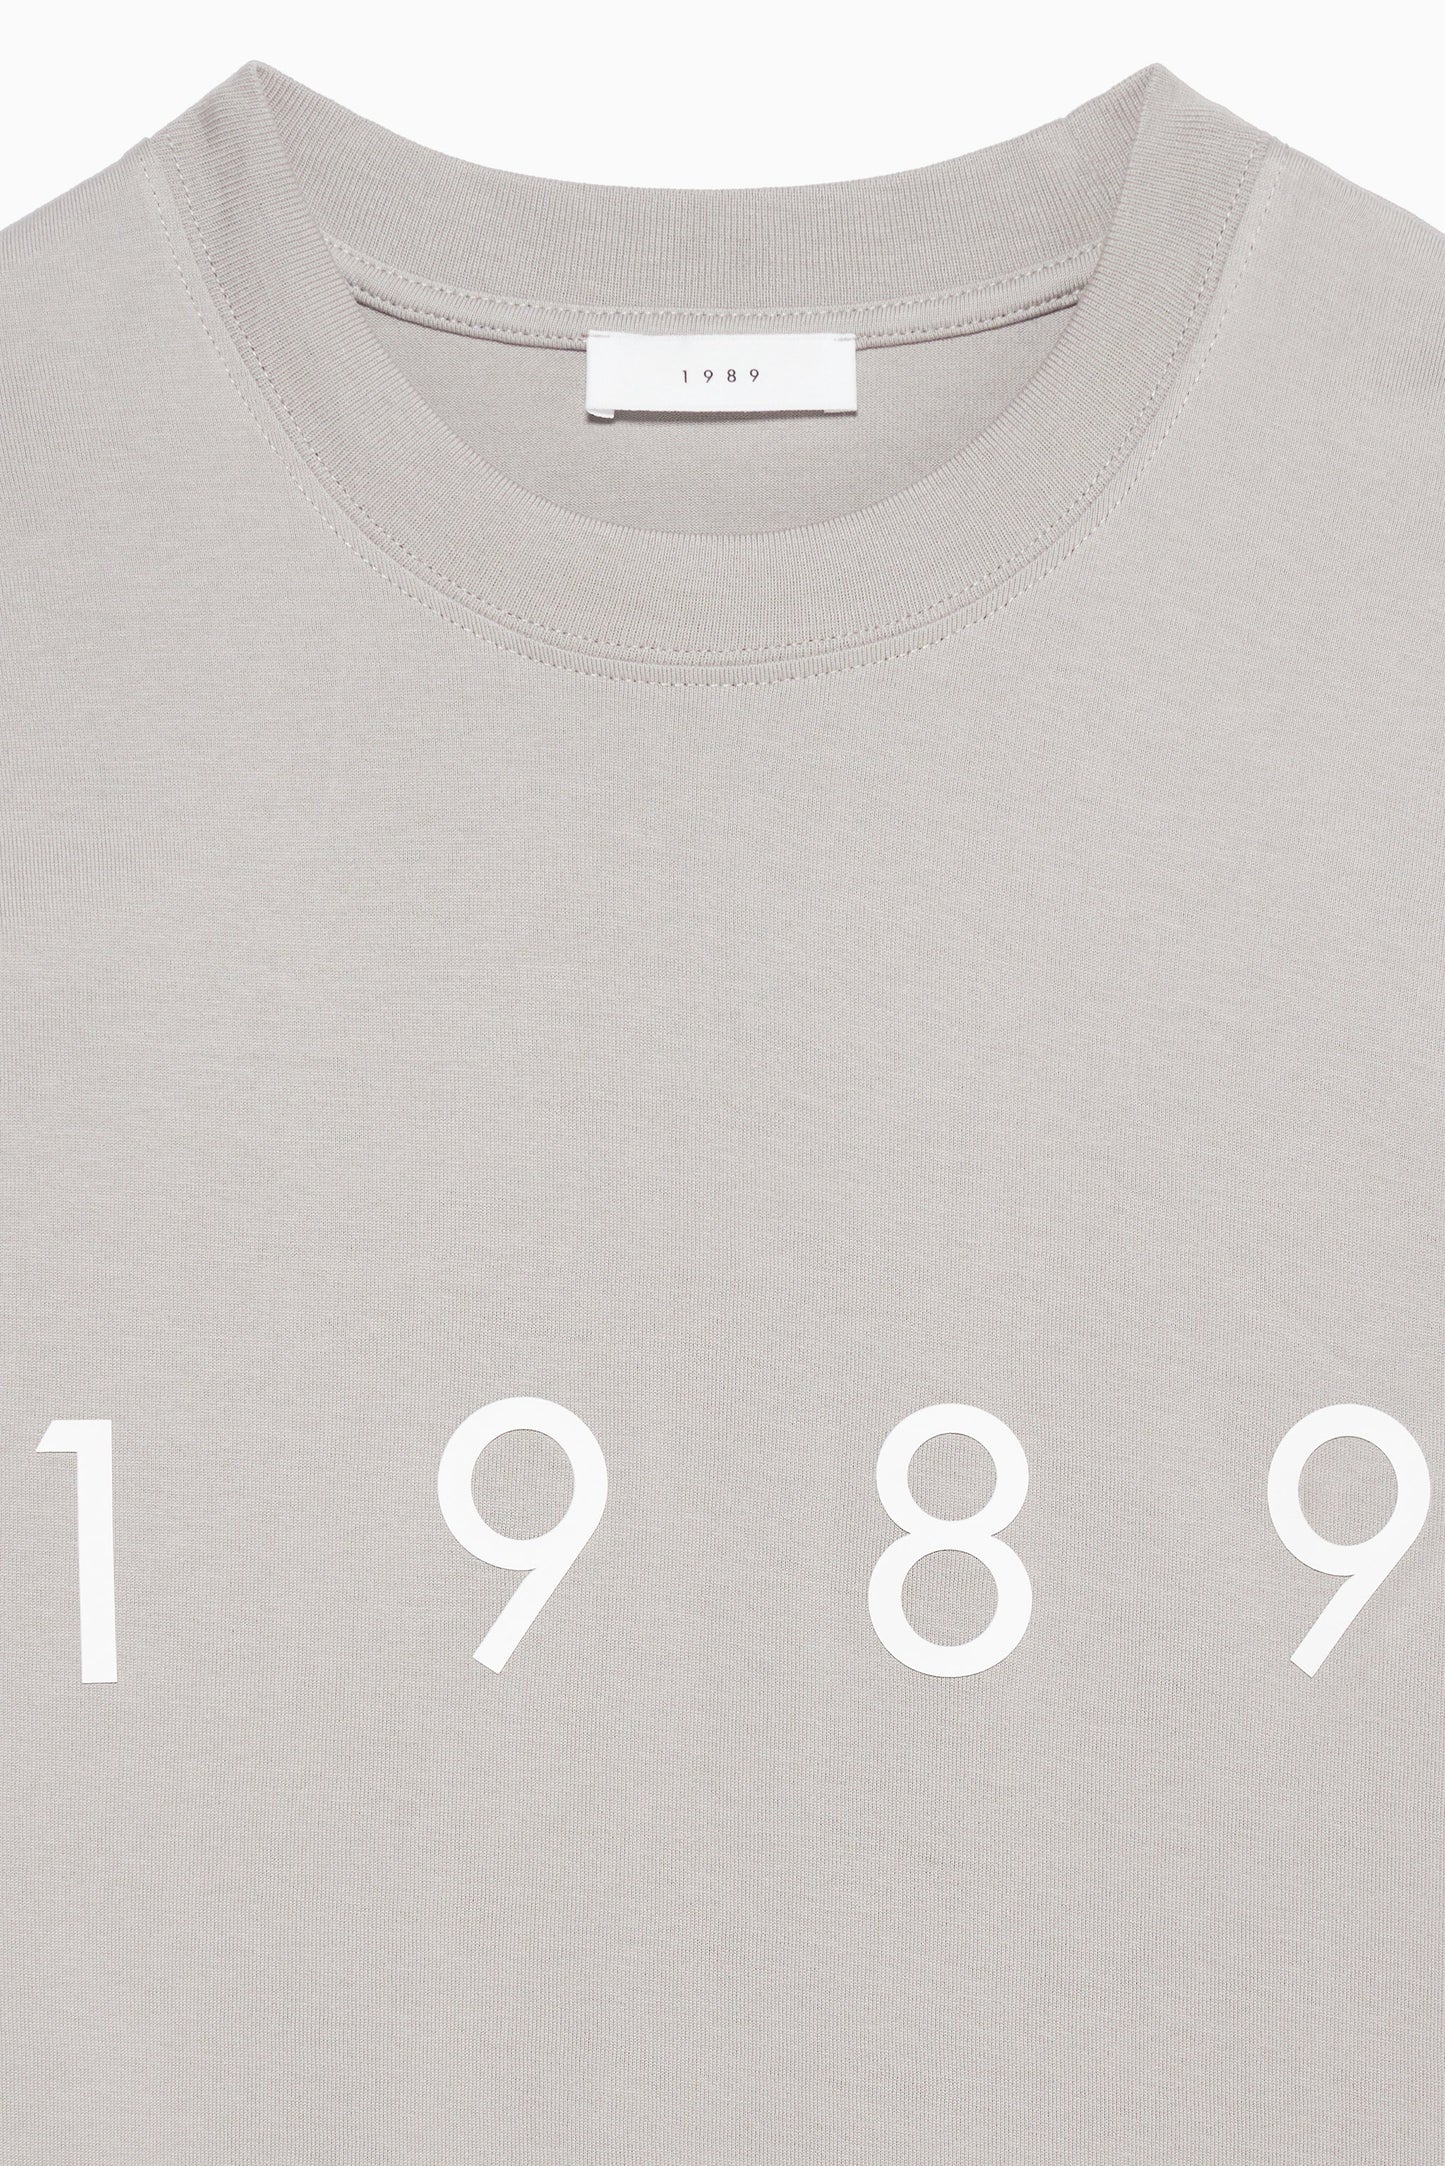 Woman's 1989 Logo T-Shirt